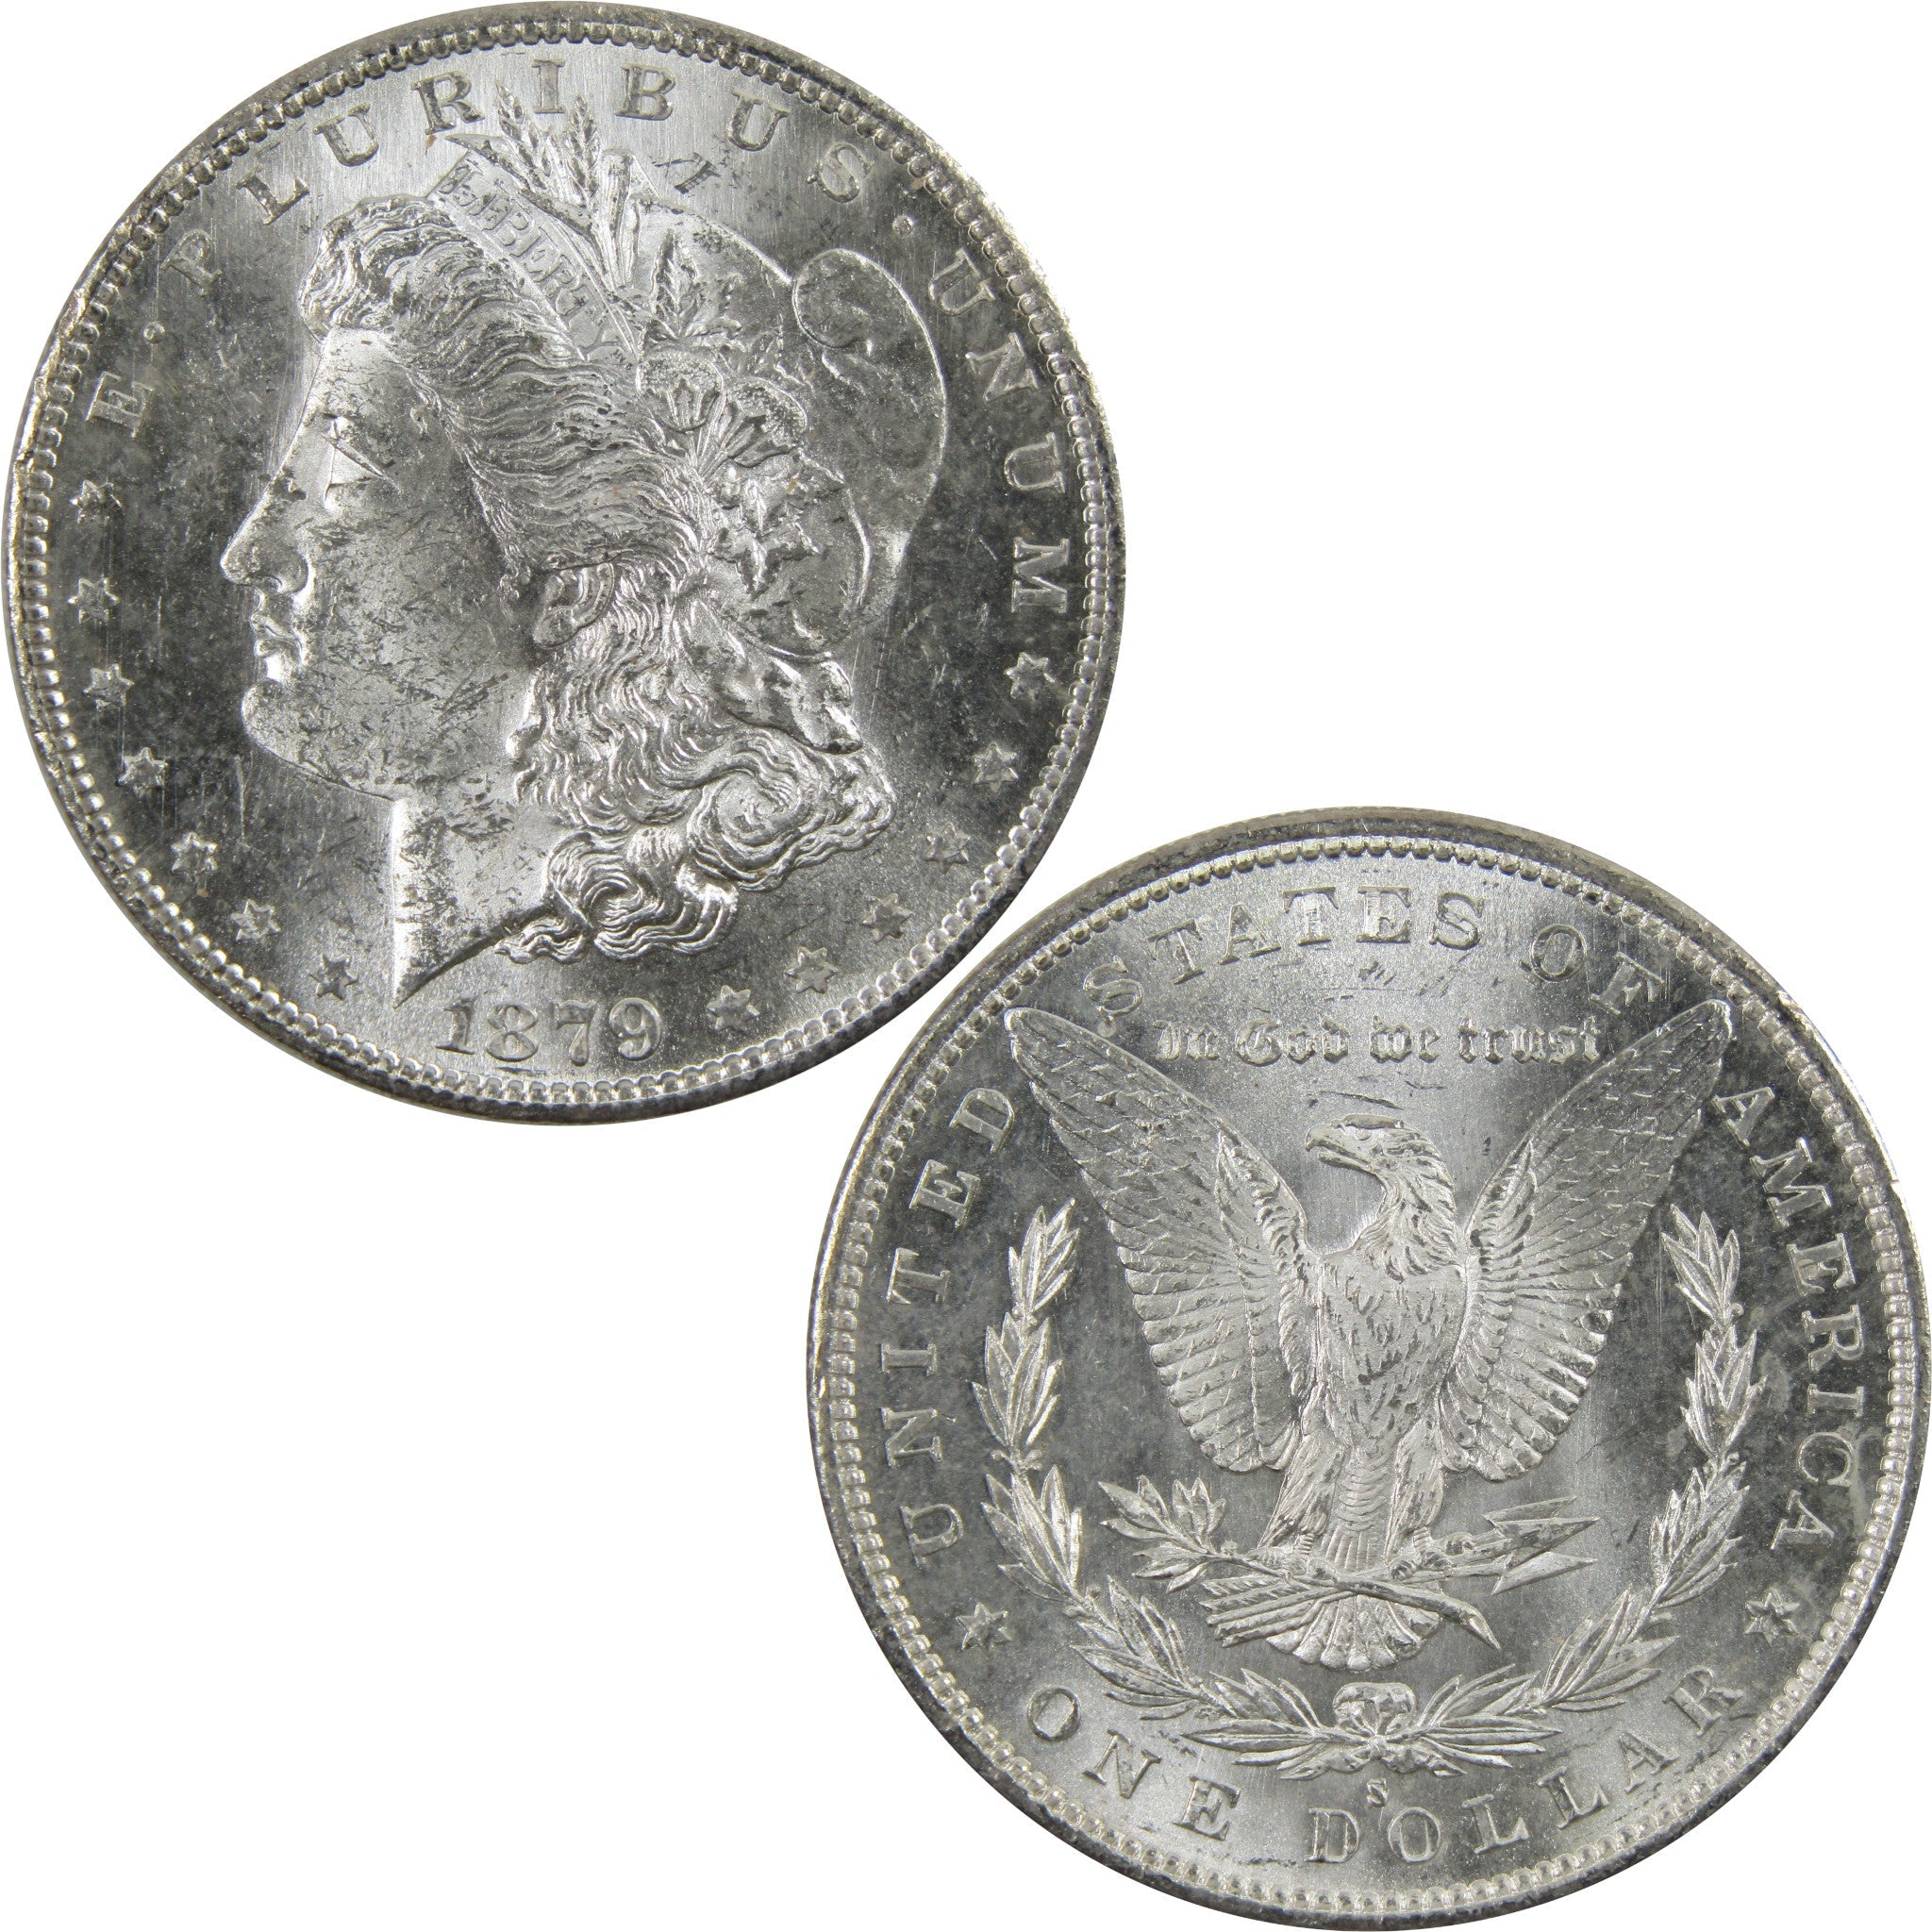 1879 S Morgan Dollar BU Uncirculated 90% Silver $1 SKU:I5445 - Morgan coin - Morgan silver dollar - Morgan silver dollar for sale - Profile Coins &amp; Collectibles